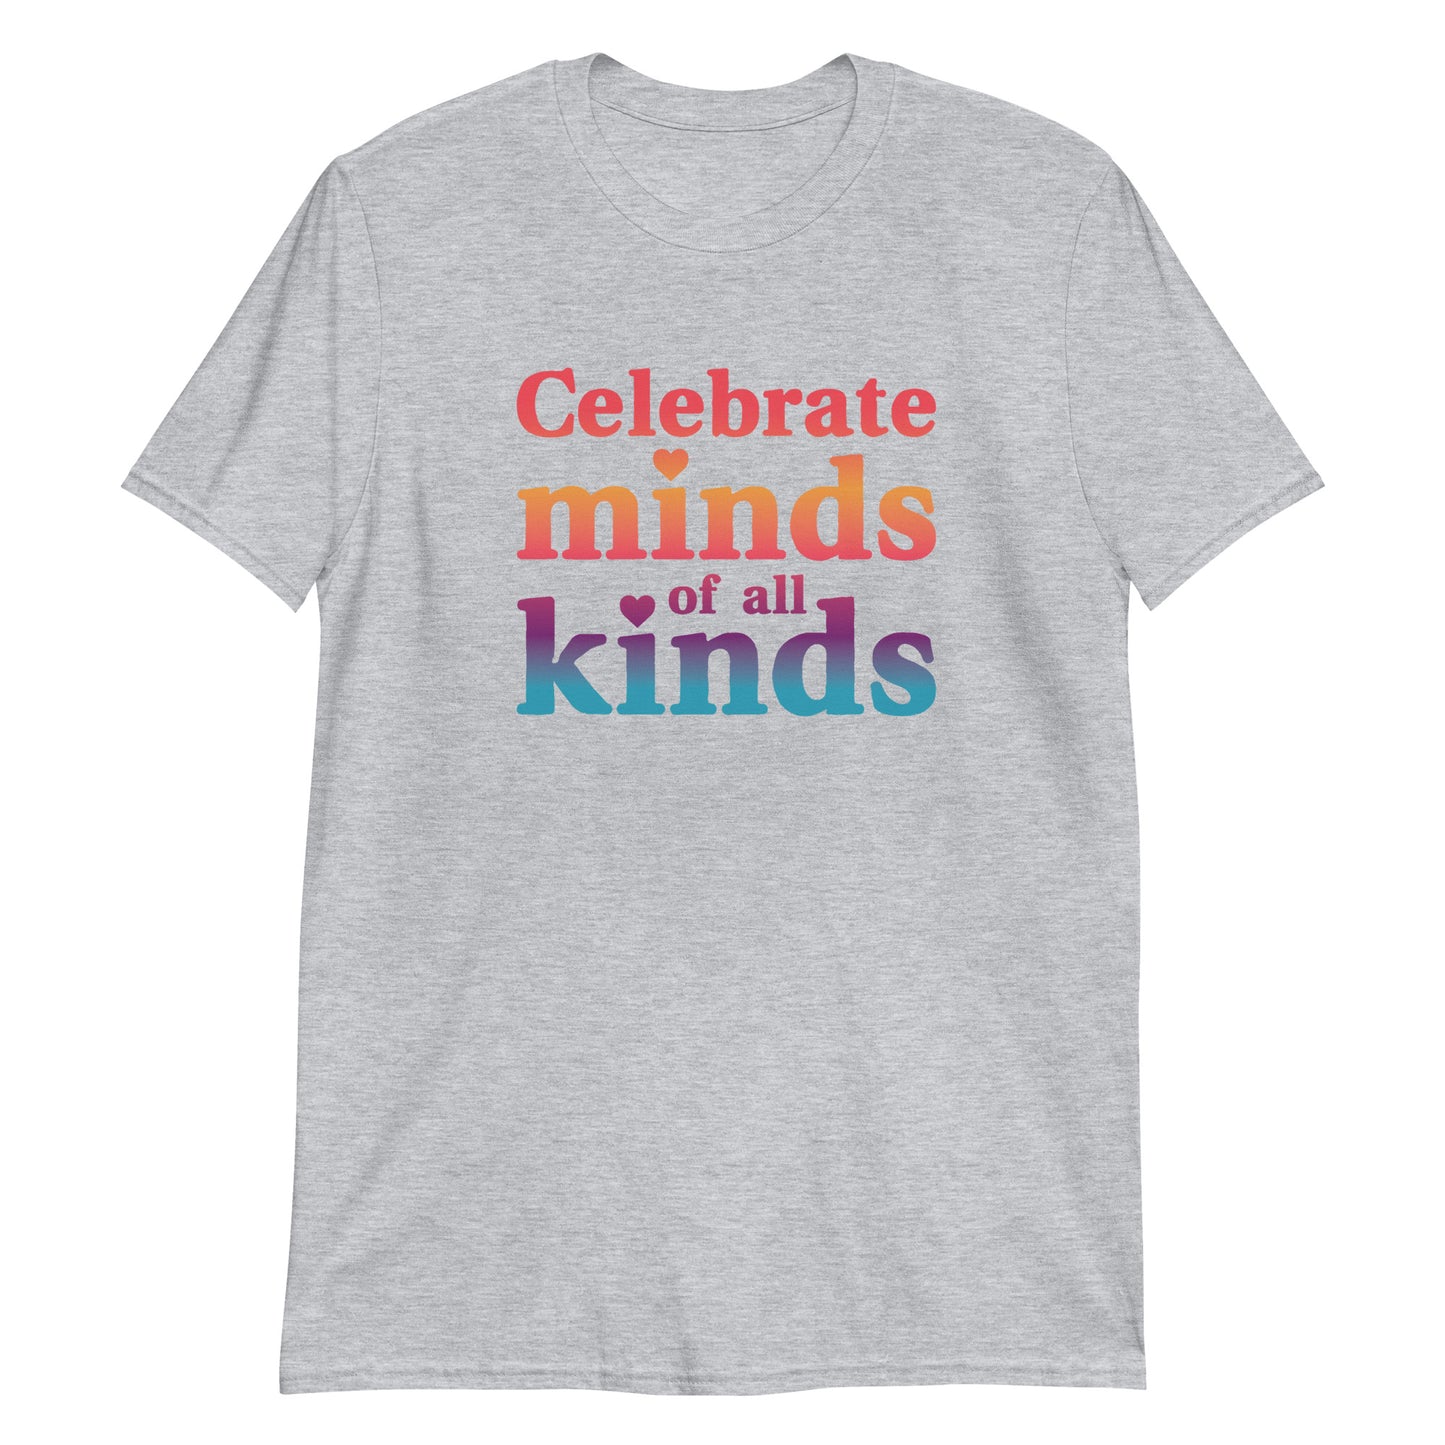 Celebrate Minds of All Kinds T-Shirt